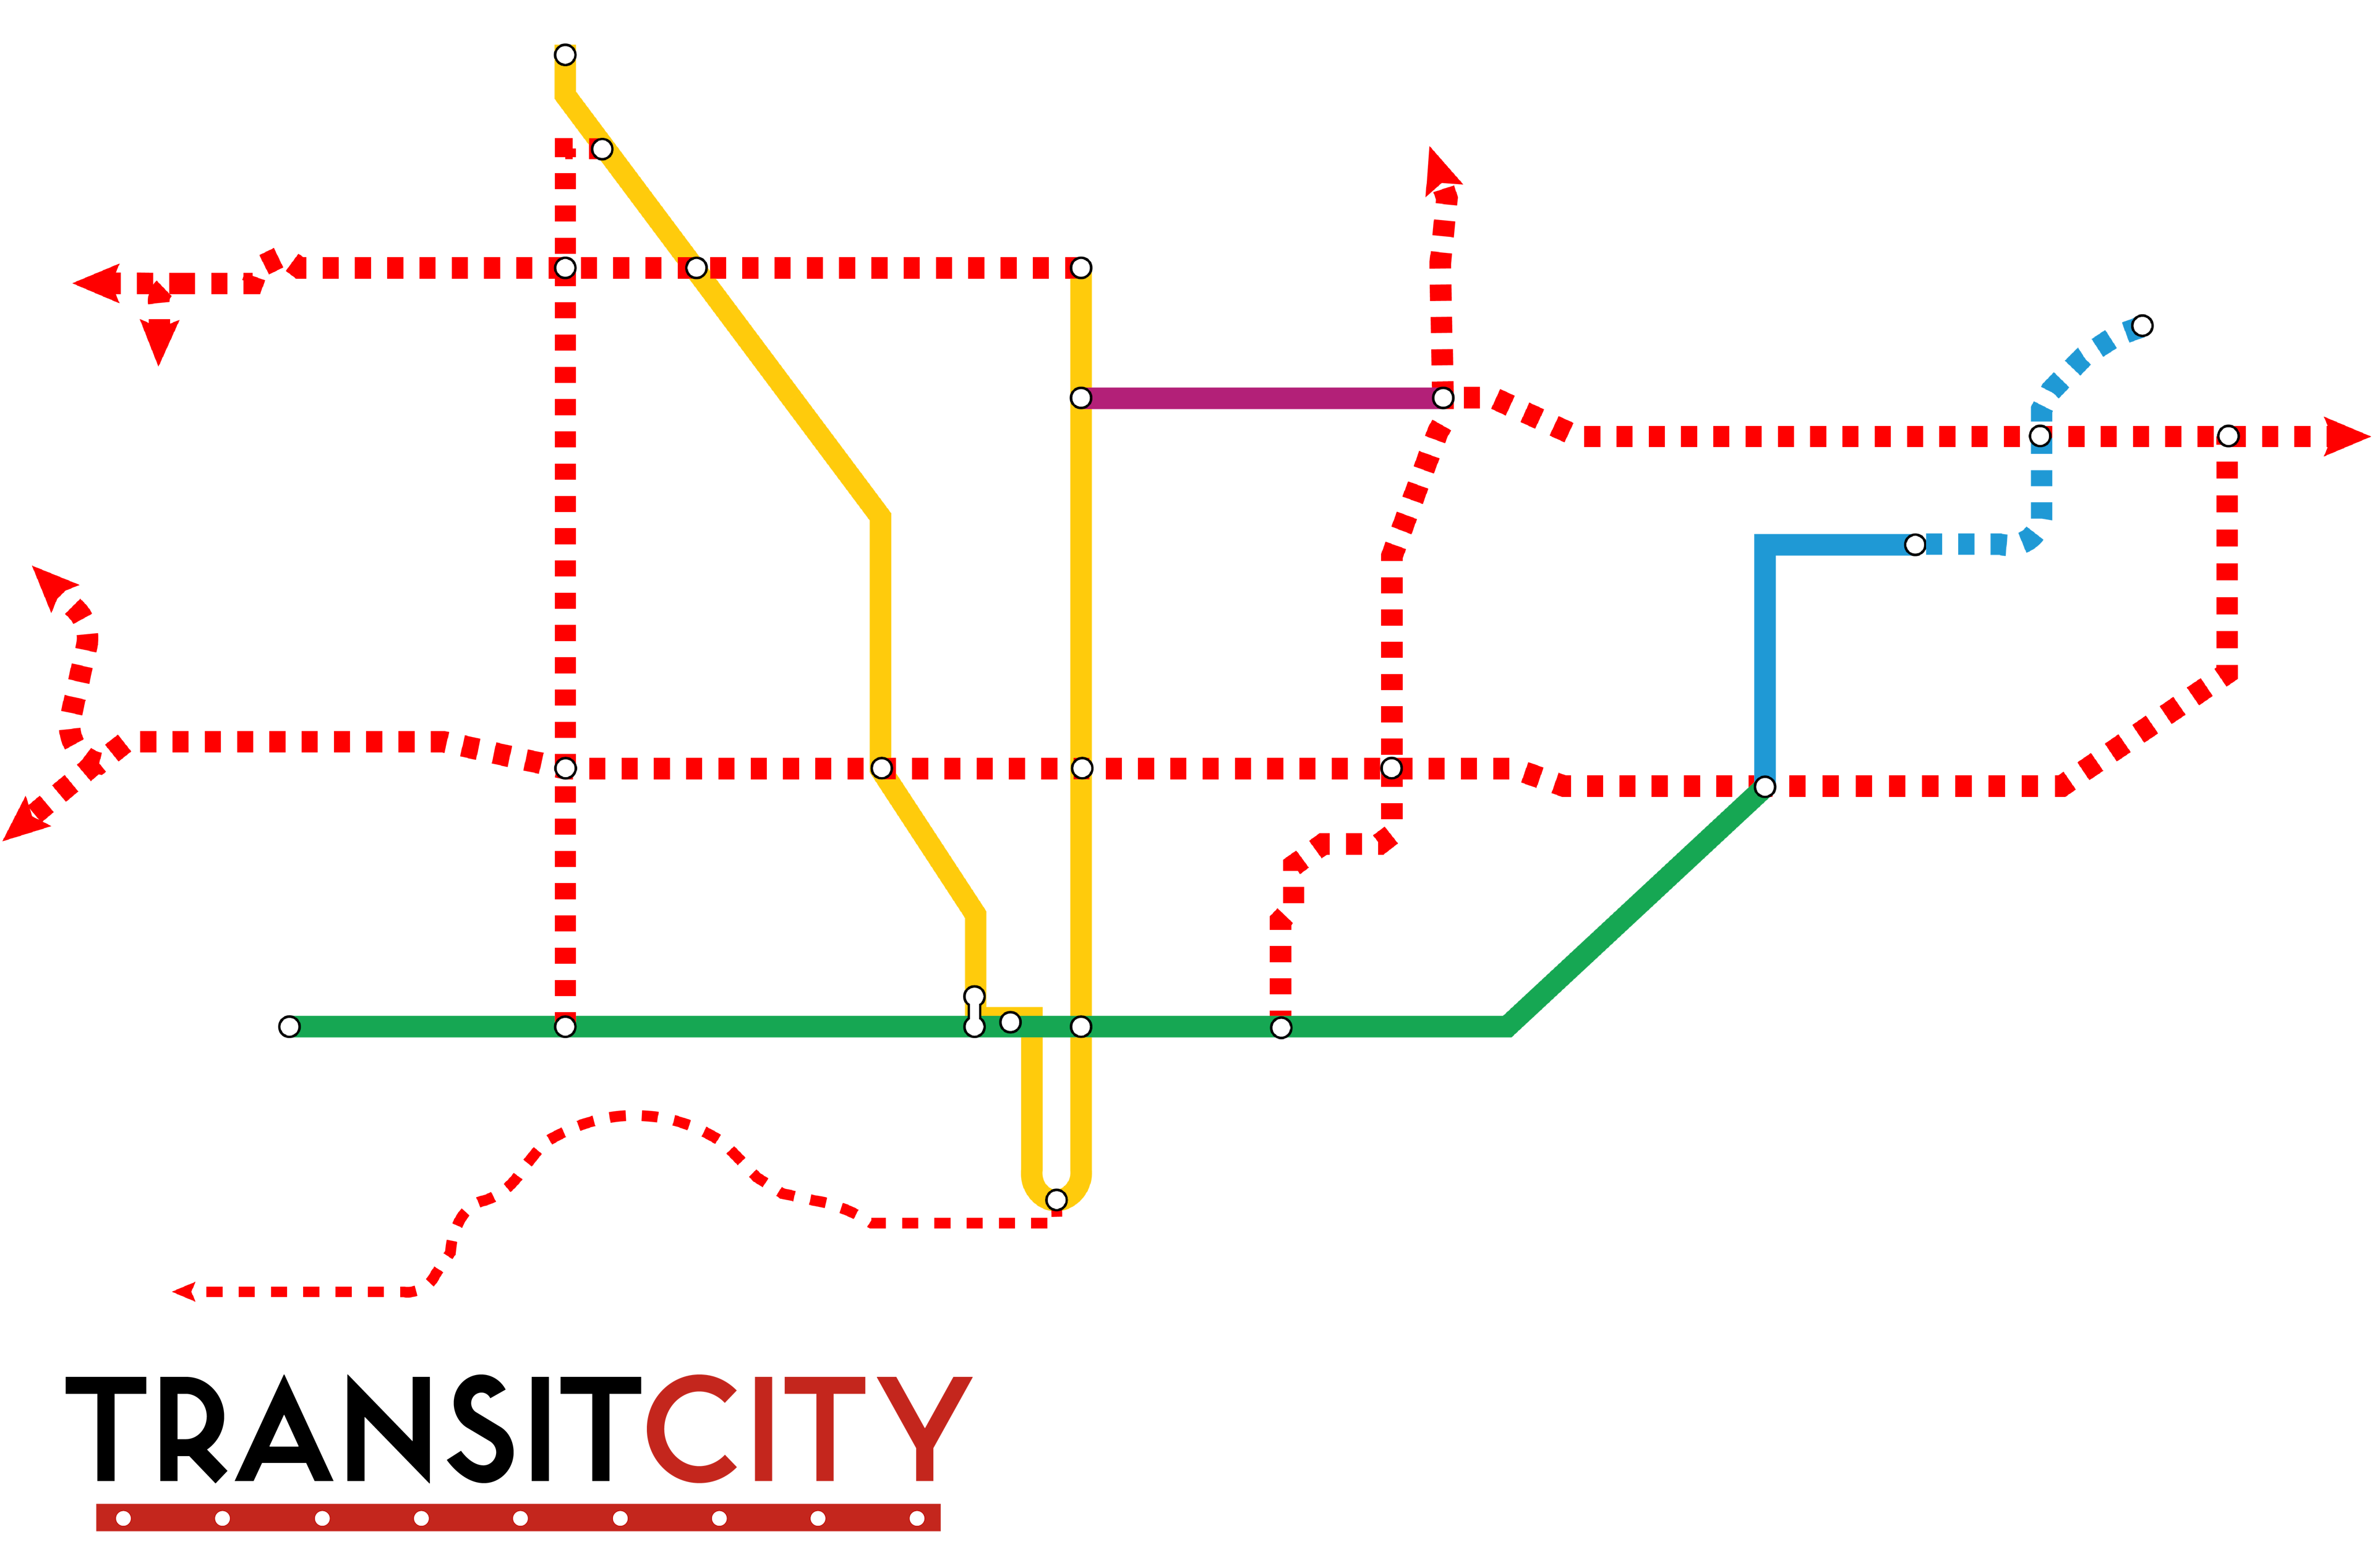 Transit City (2007)